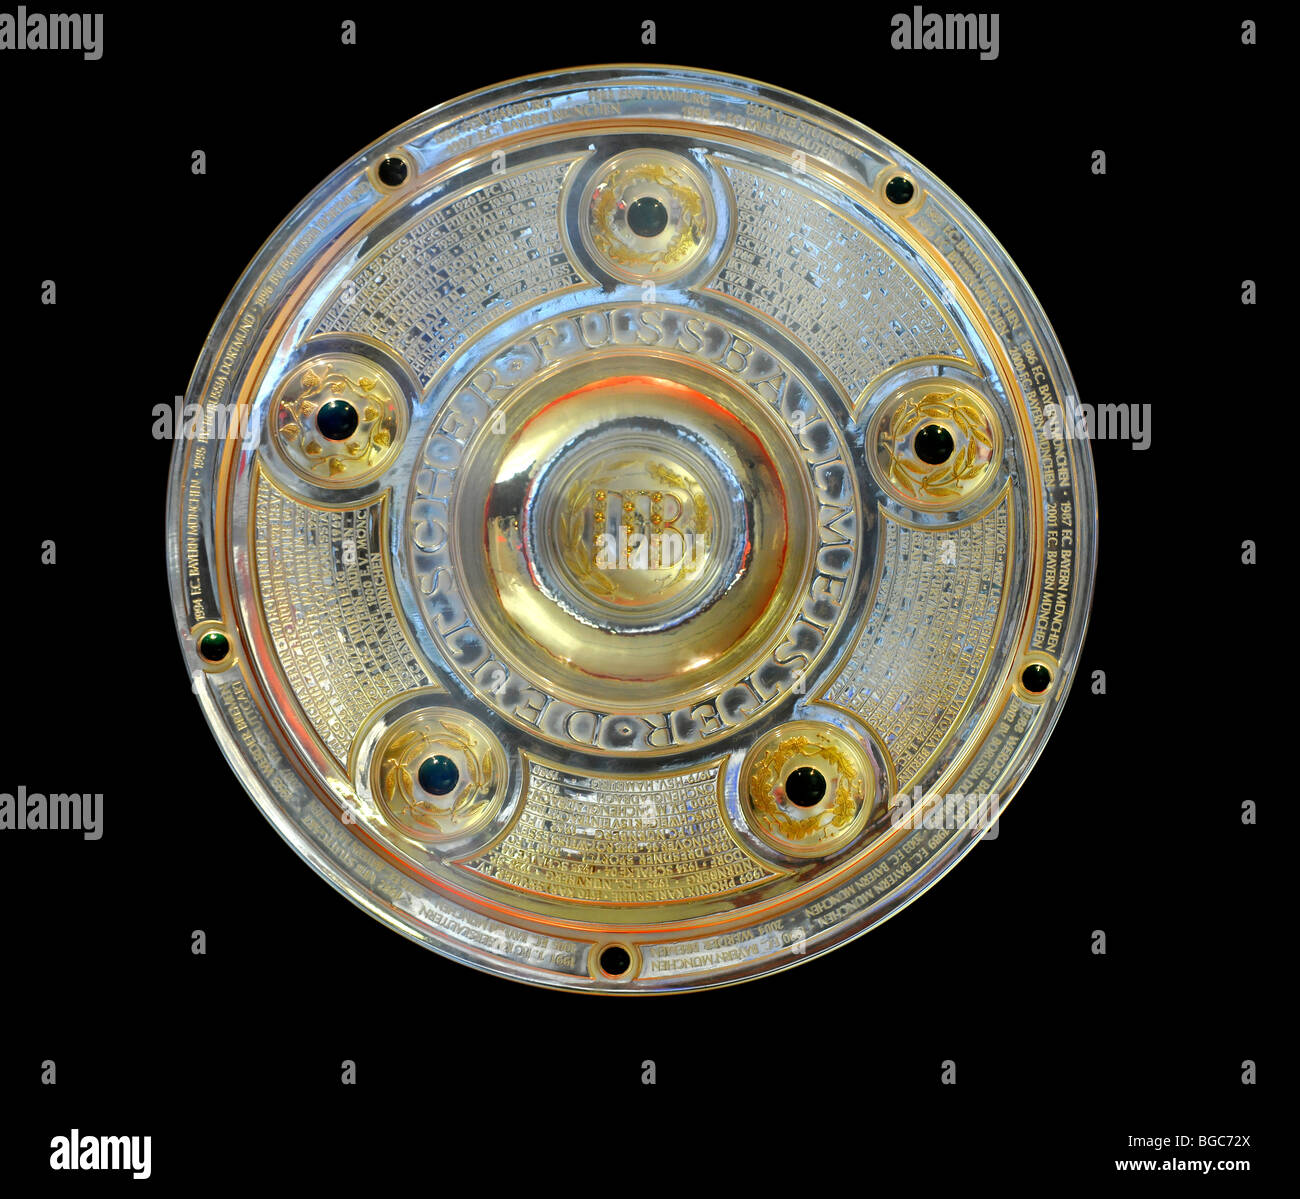 Meisterschale, Deutsche Bundesliga German Football League Championship trofeo, cut-out Foto Stock